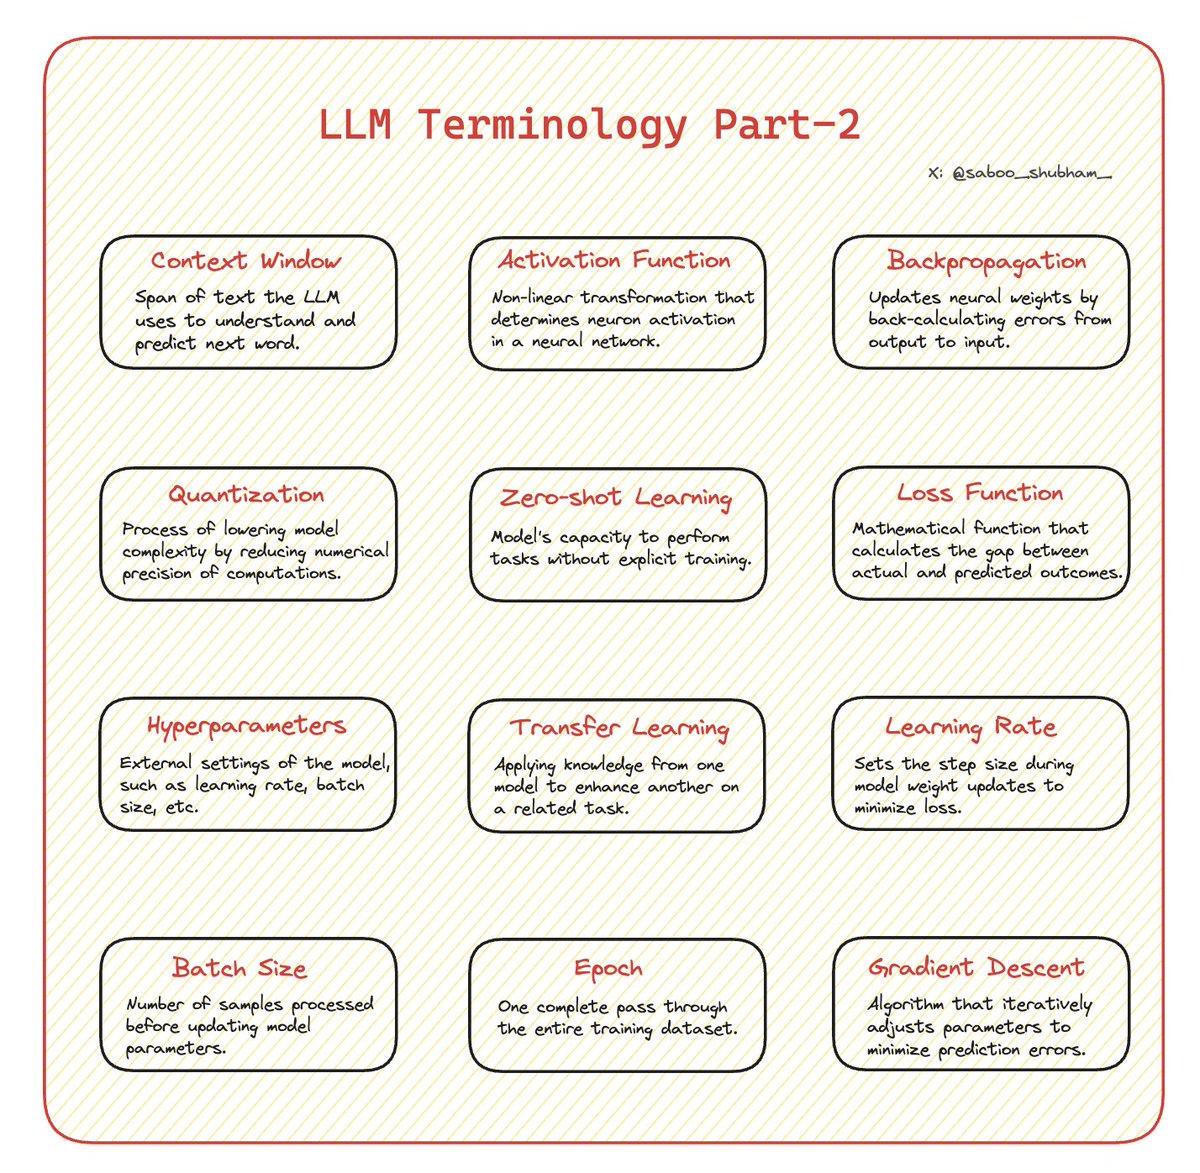 LLM Terminology Cheatsheet - Part 2